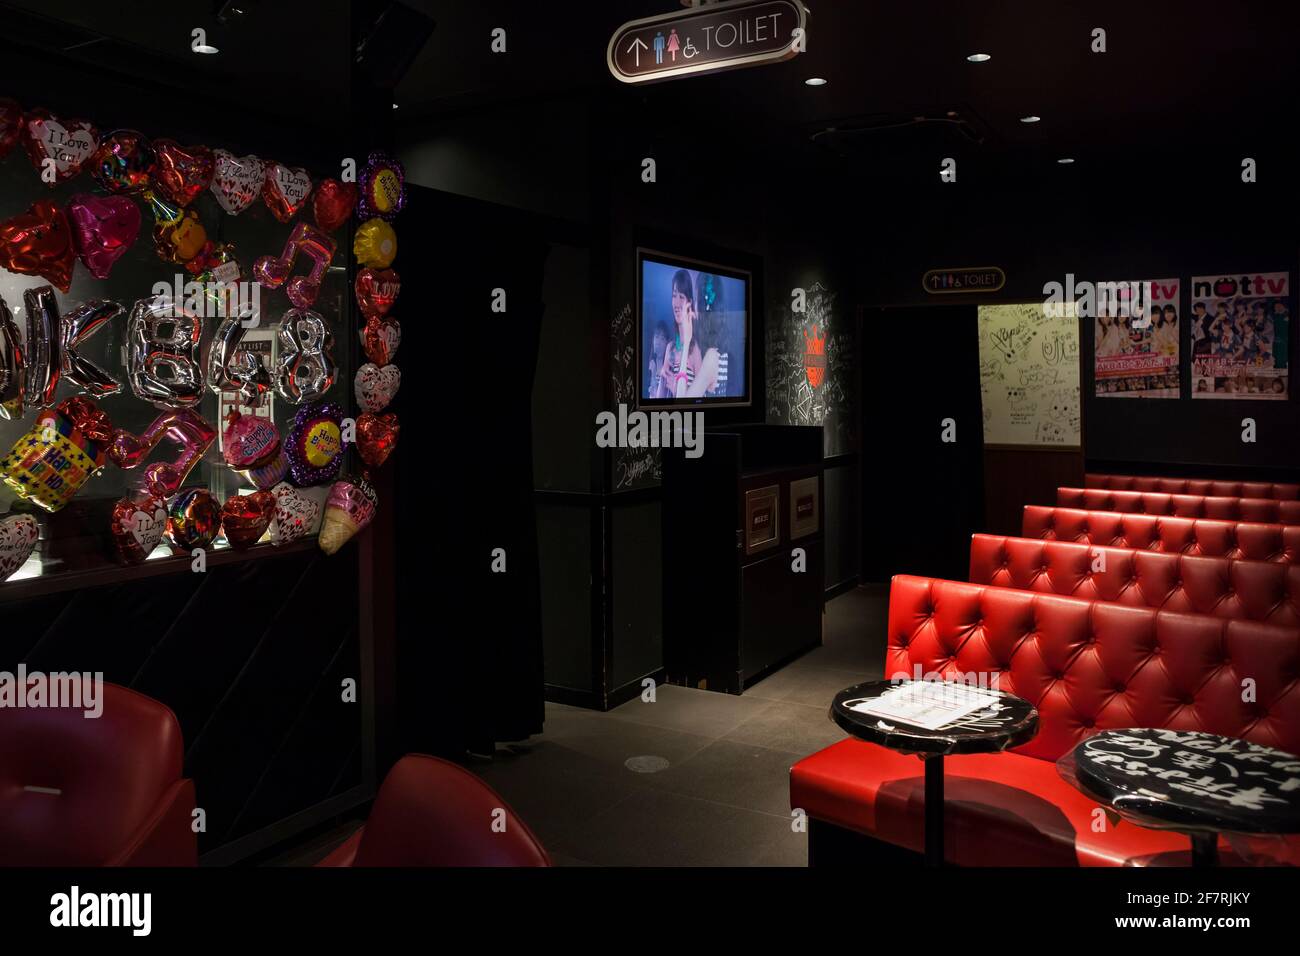 Horizontal view of the interior of the AKAB48 Cafe dedicated to the AKAB48 Japanese idol group, Akihabara, Tokyo, Japan Stock Photo